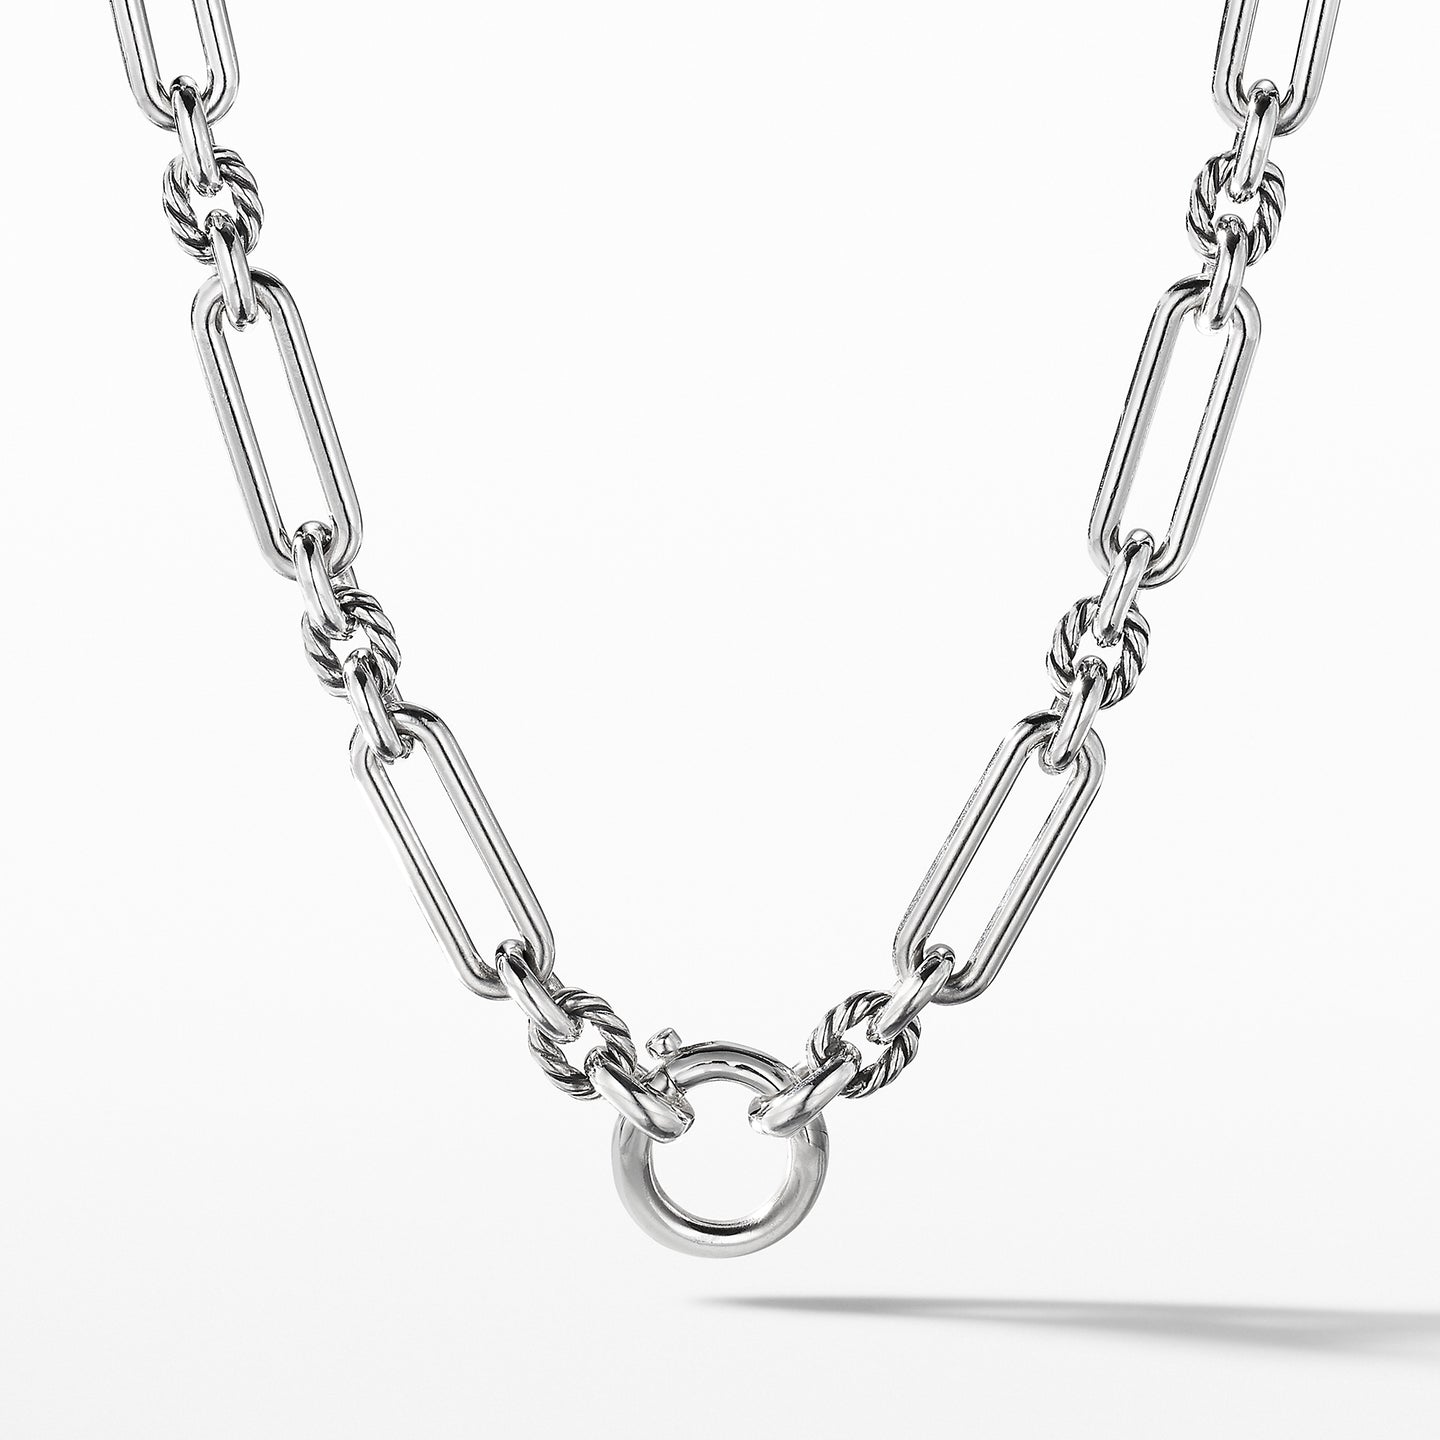 David Yurman Lexington Chain Necklace